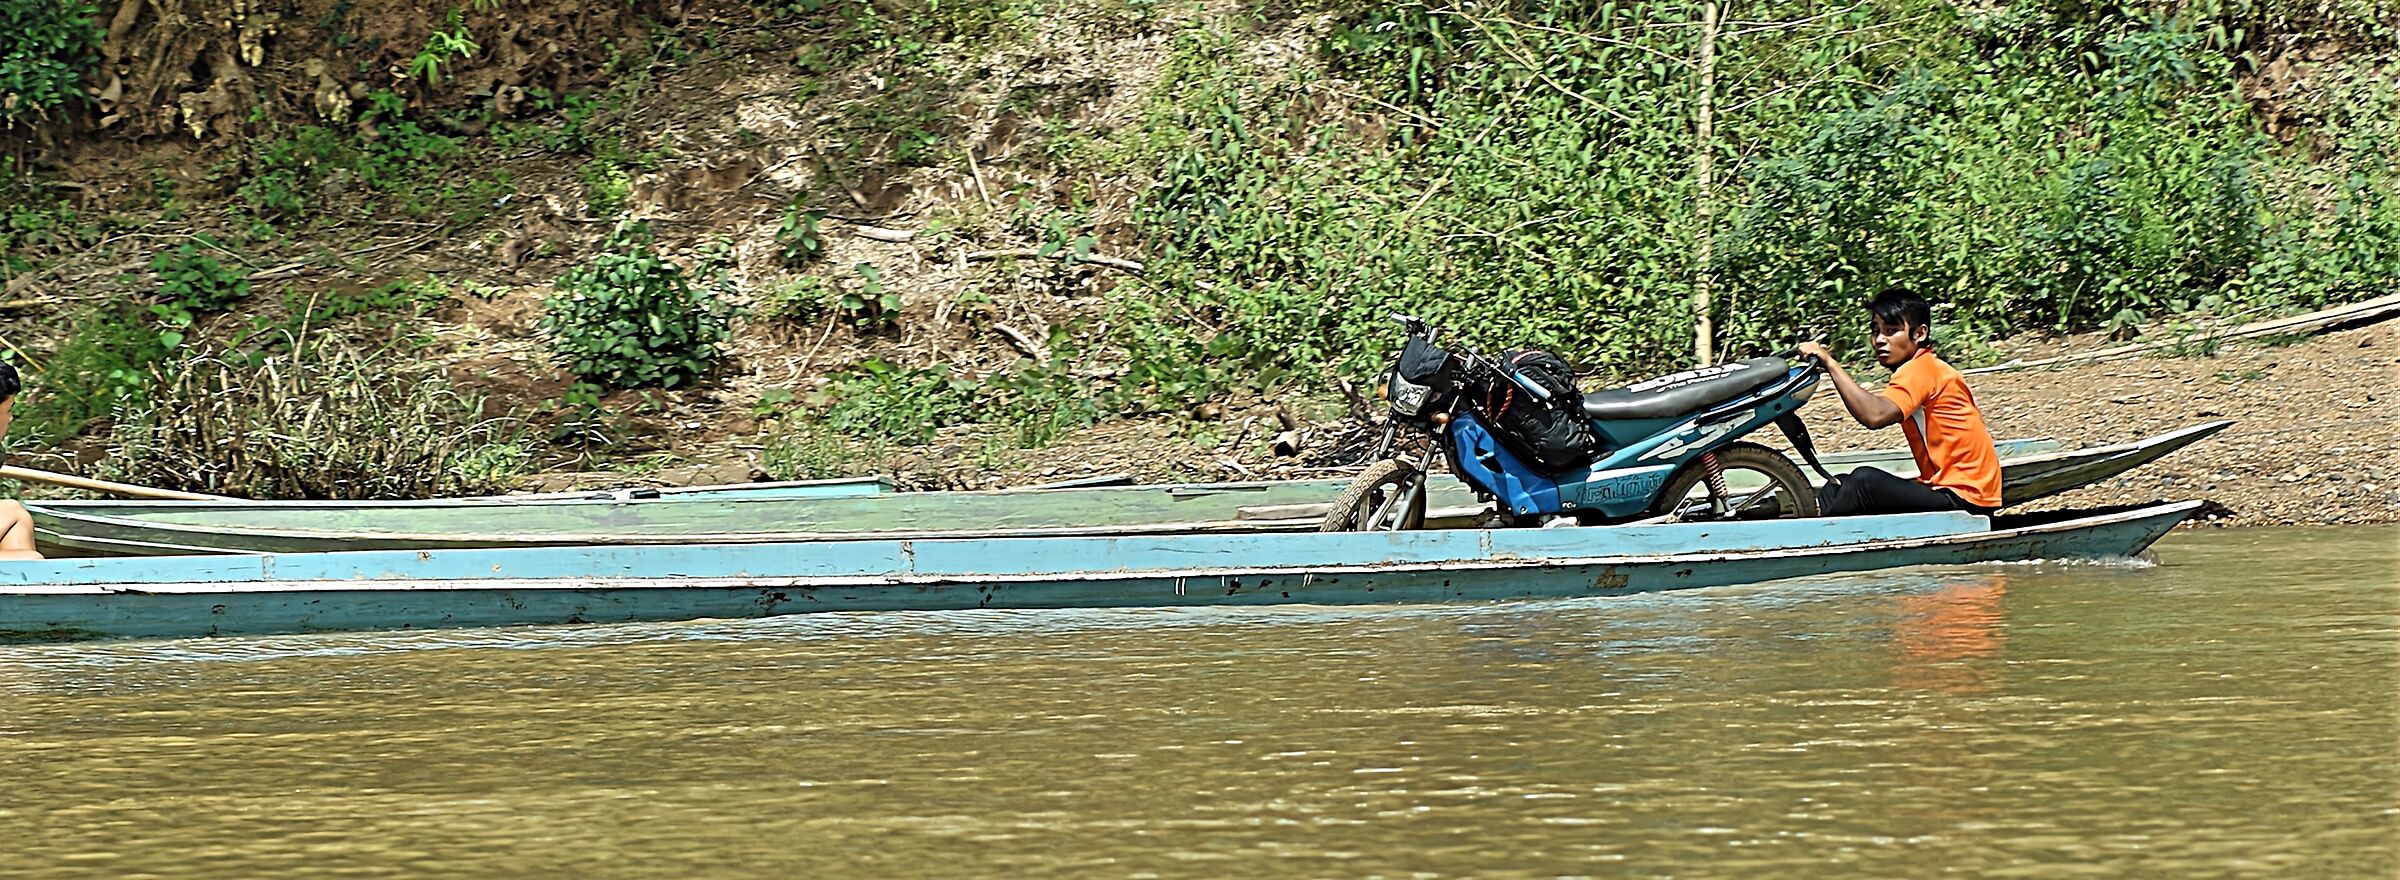 Moto d'acqua sul Mekong...